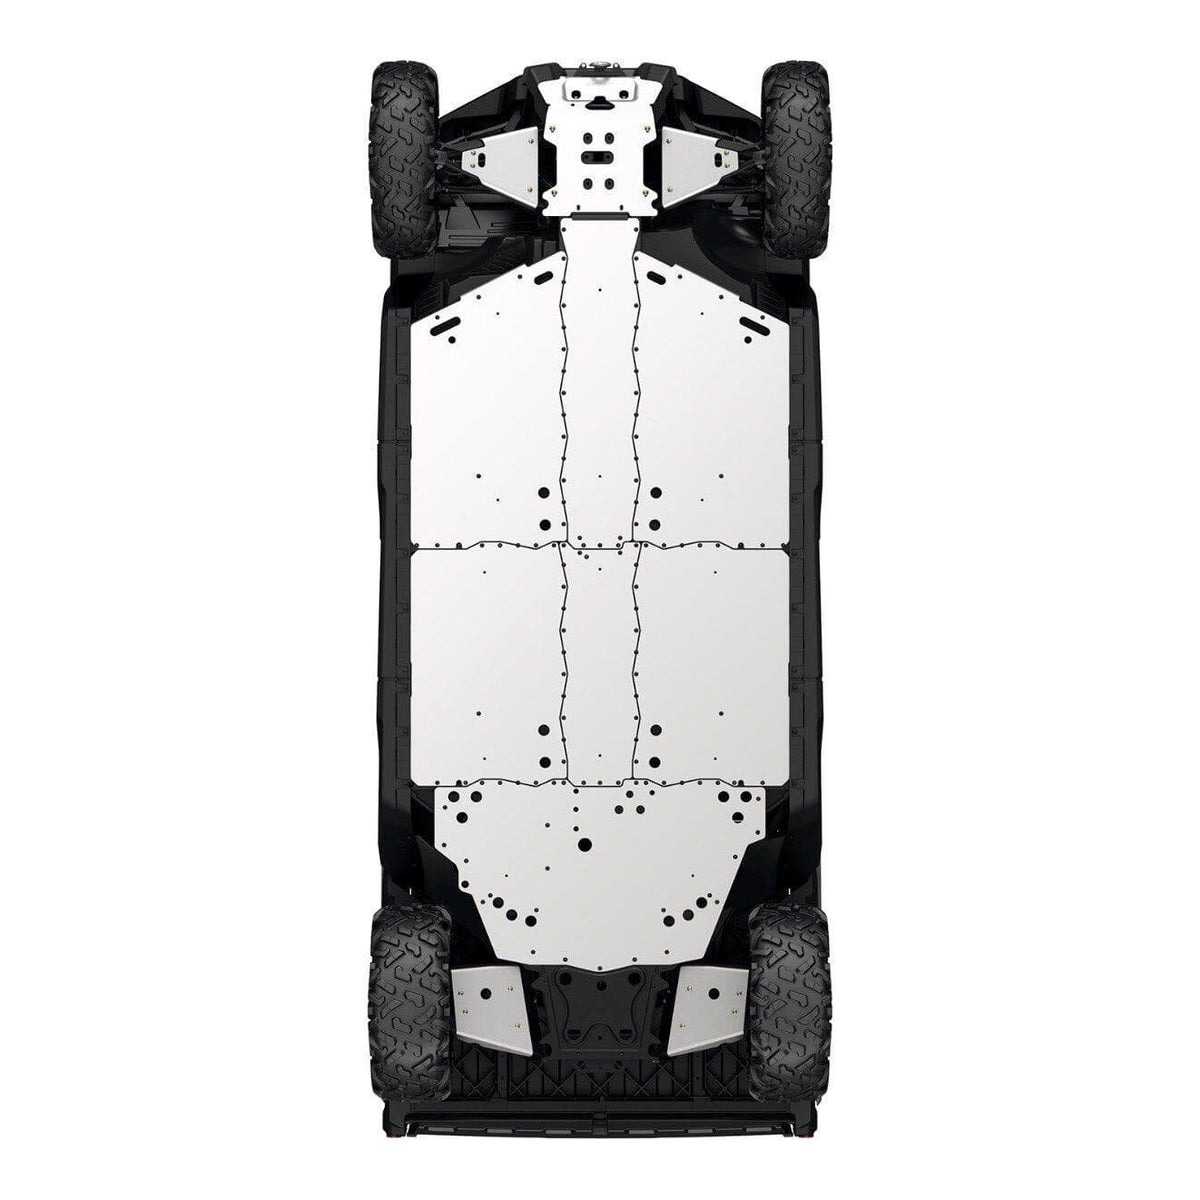 Underbelly Skid Plate Kit - Defender - Factory Recreation